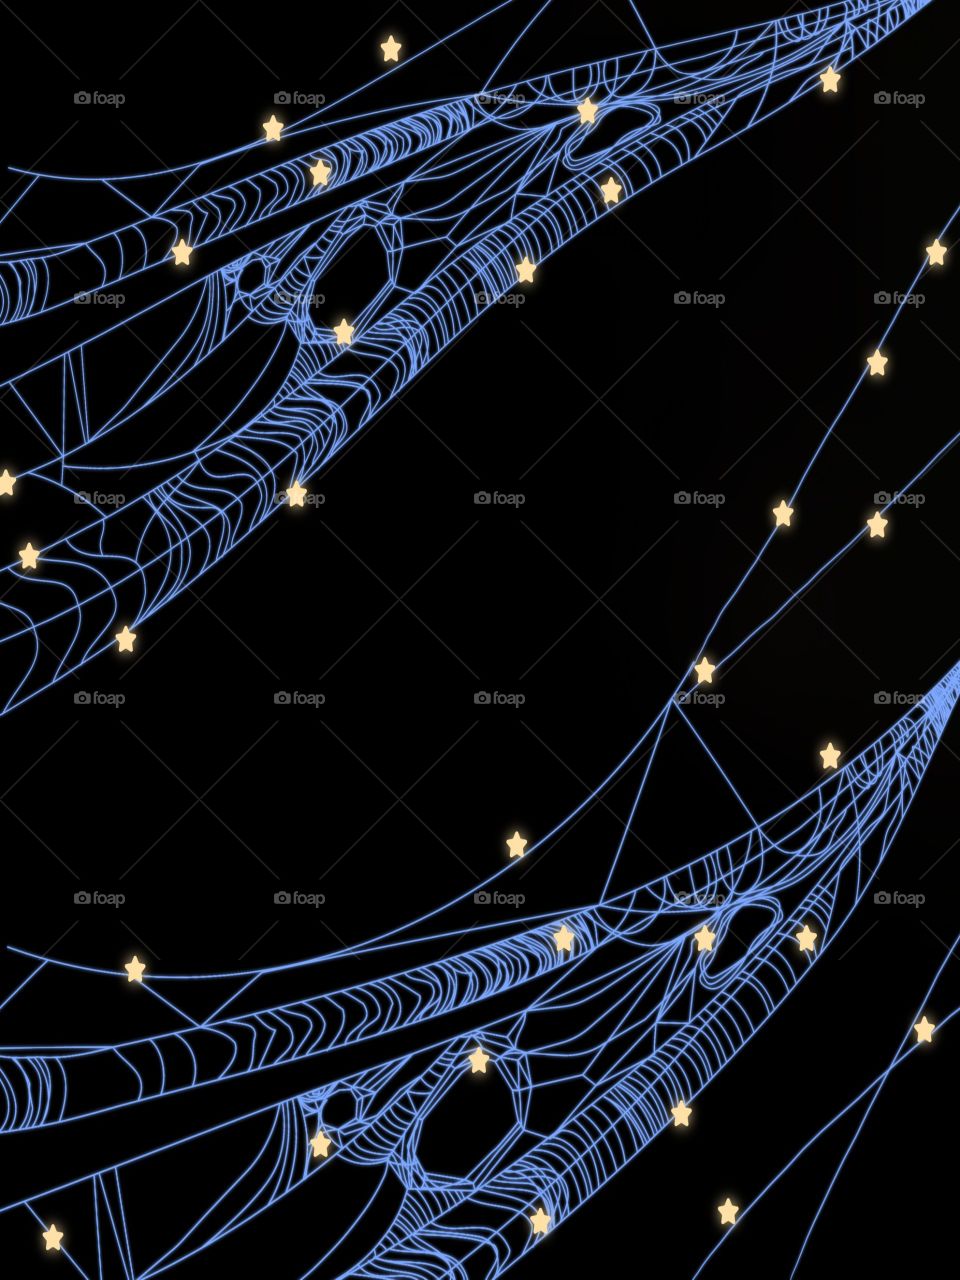 abstract and art close up cobweb with star